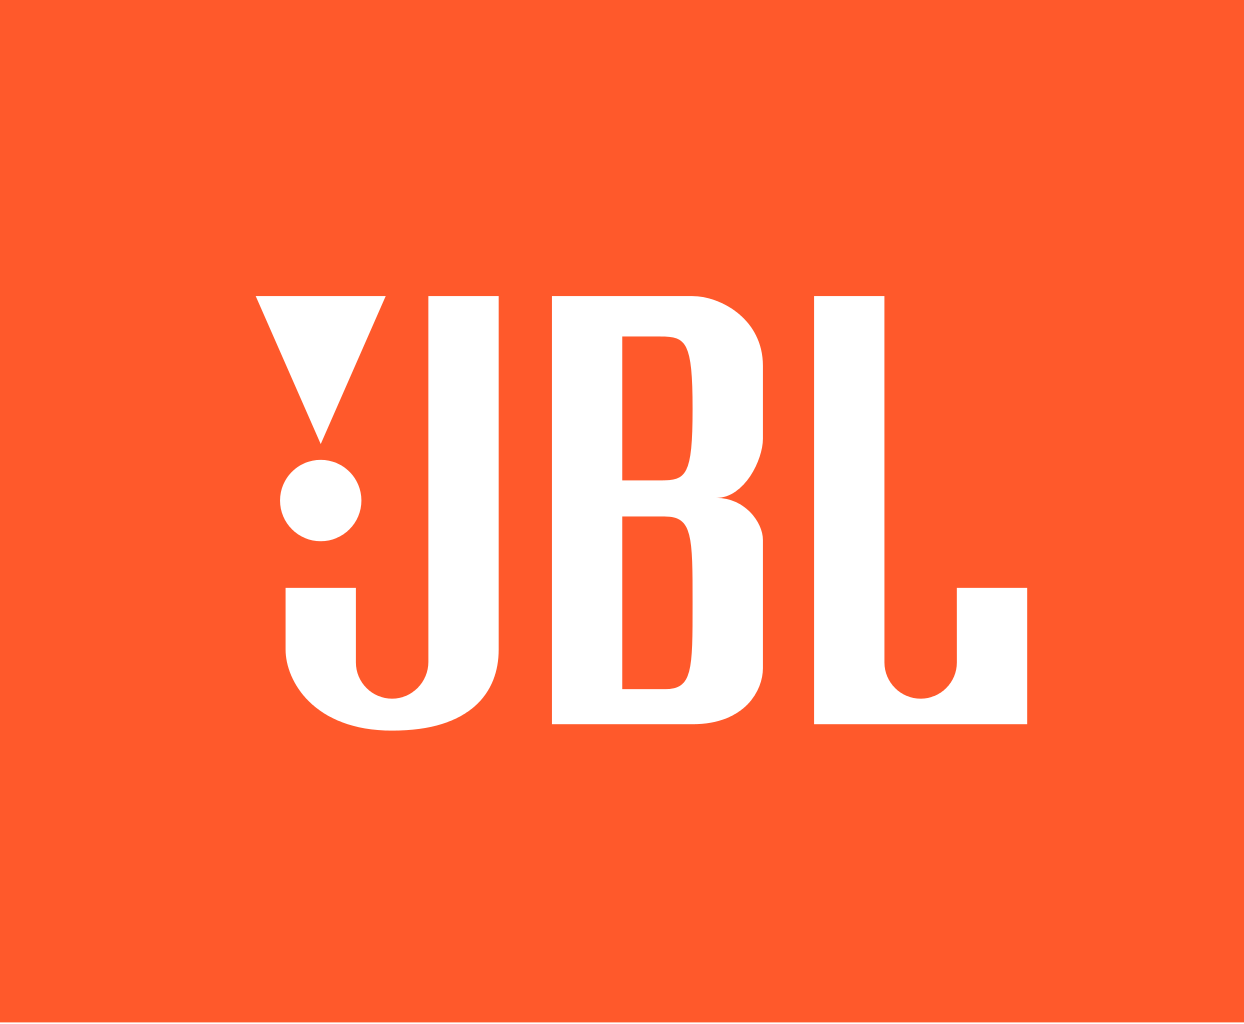 JBL Logo and HQ Wallpaper. Full HD Picture